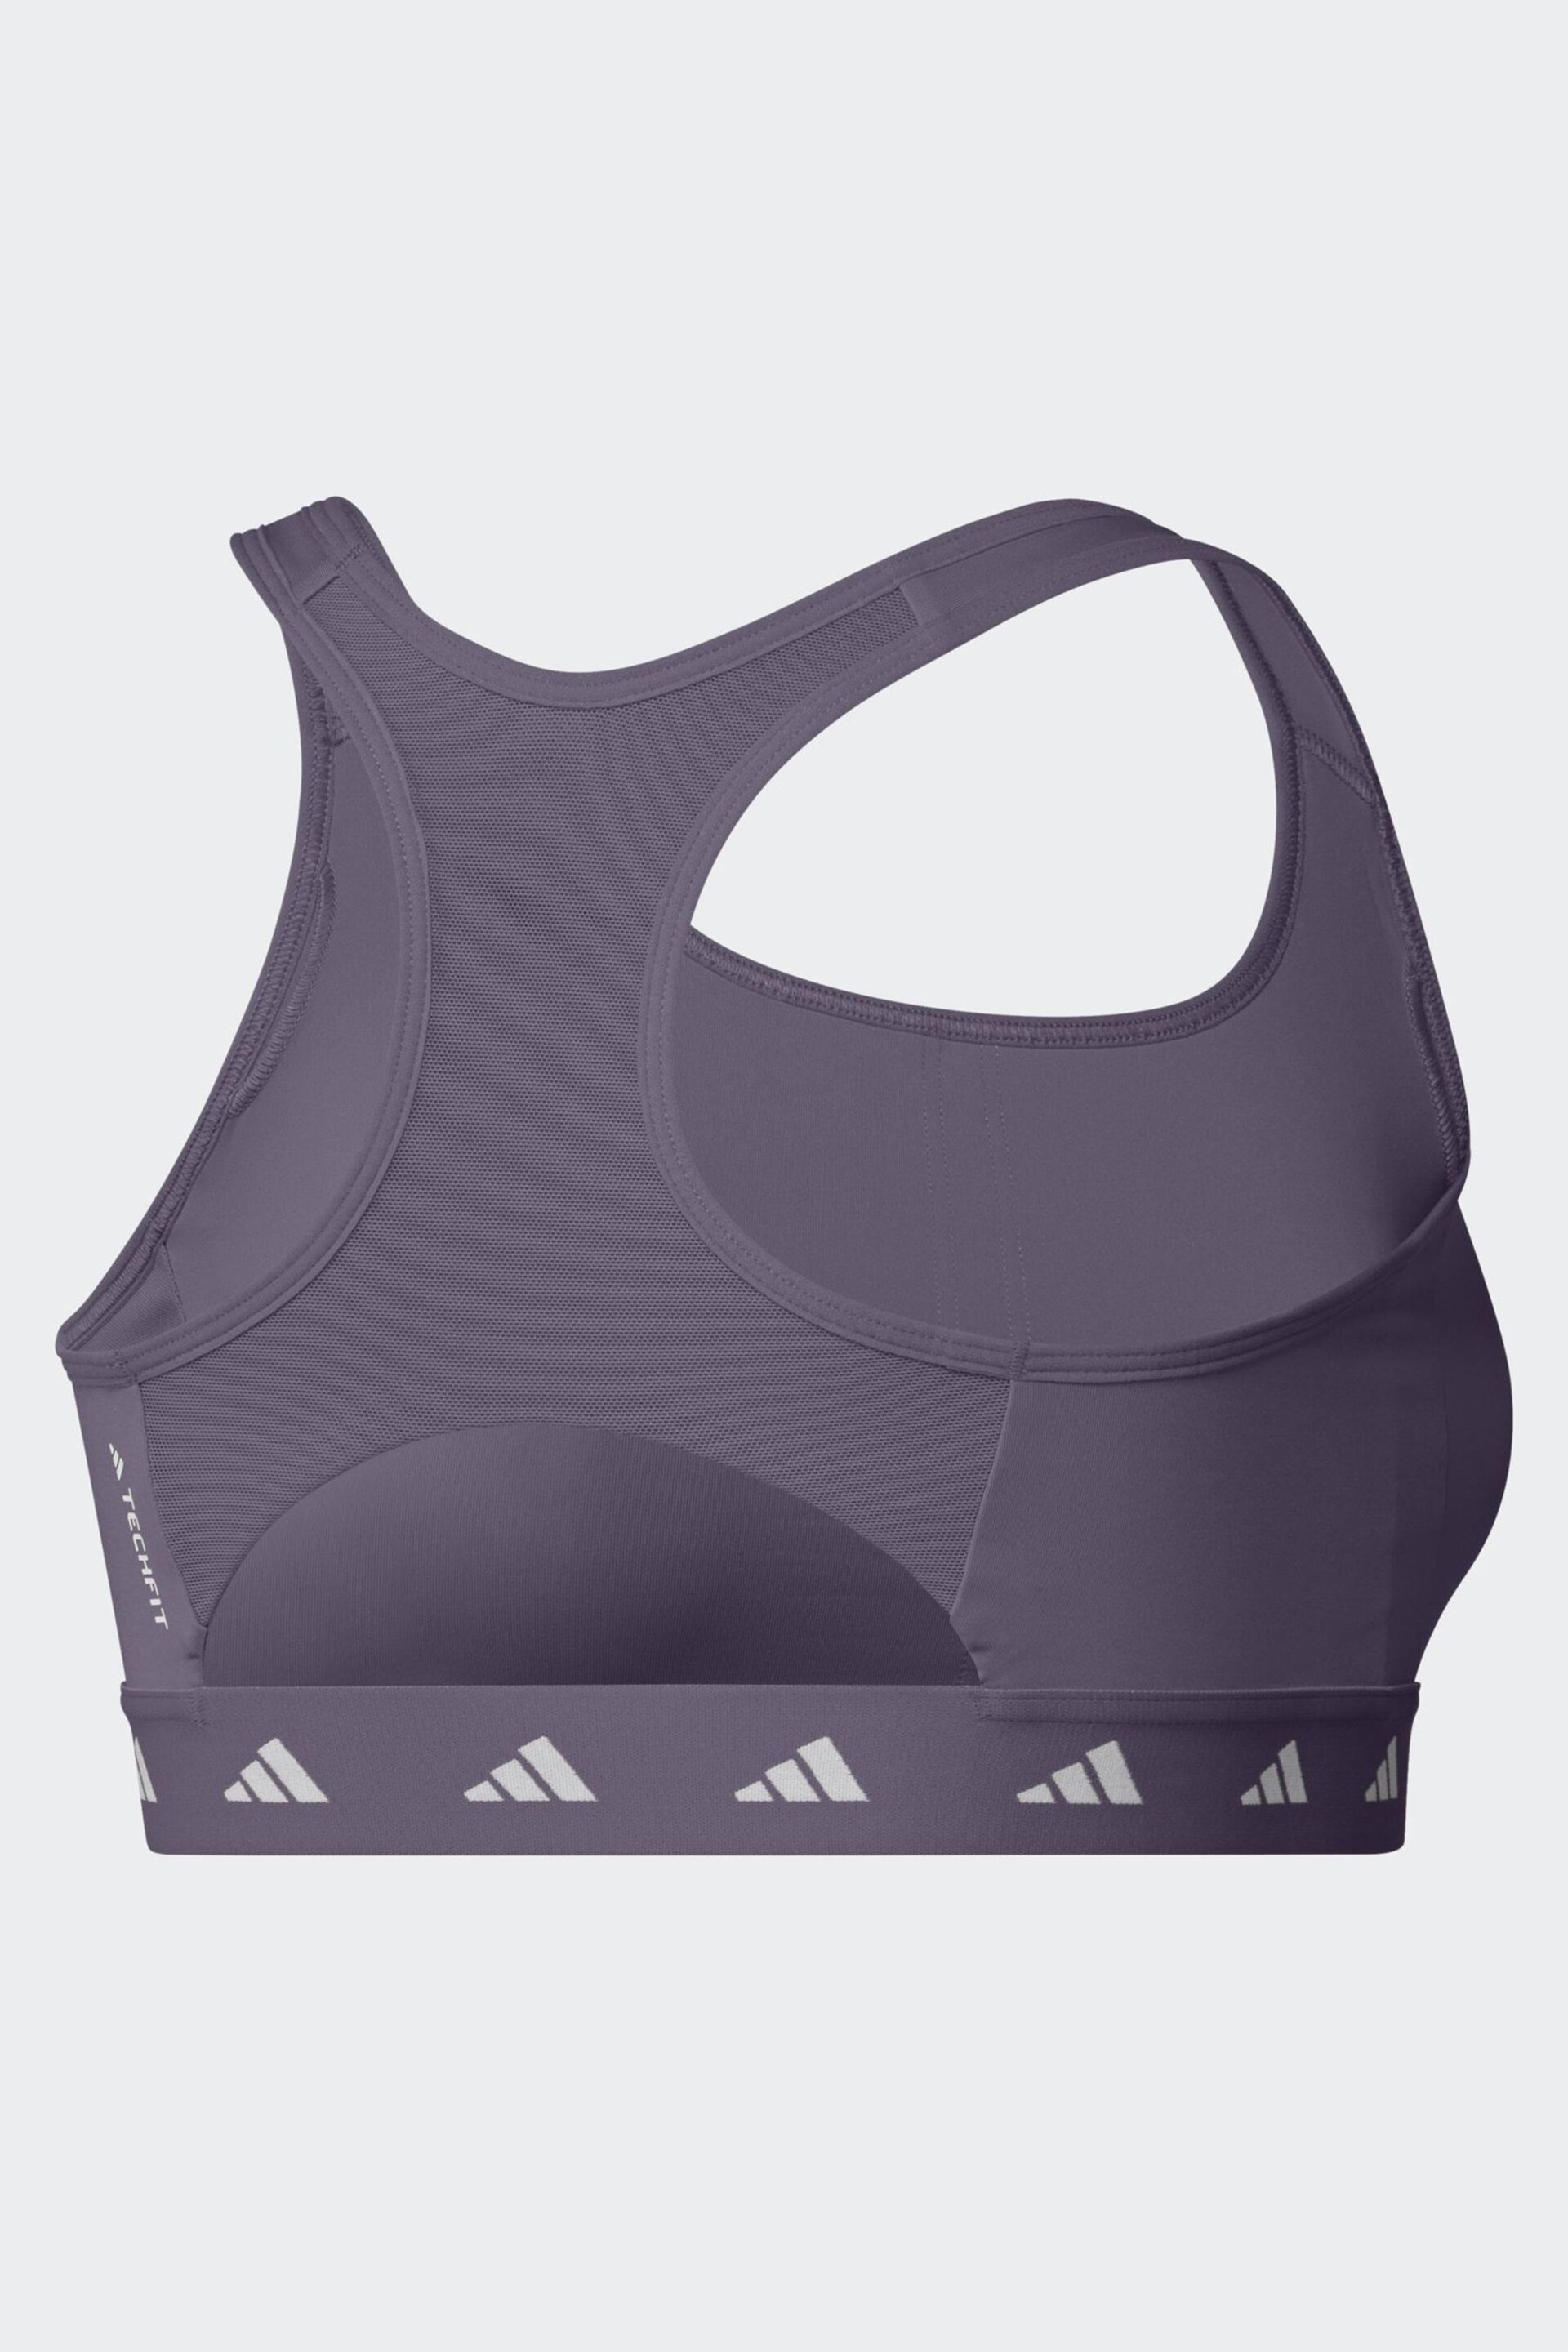 adidas Purple Techfit Medium Support Bra - Image 2 of 3